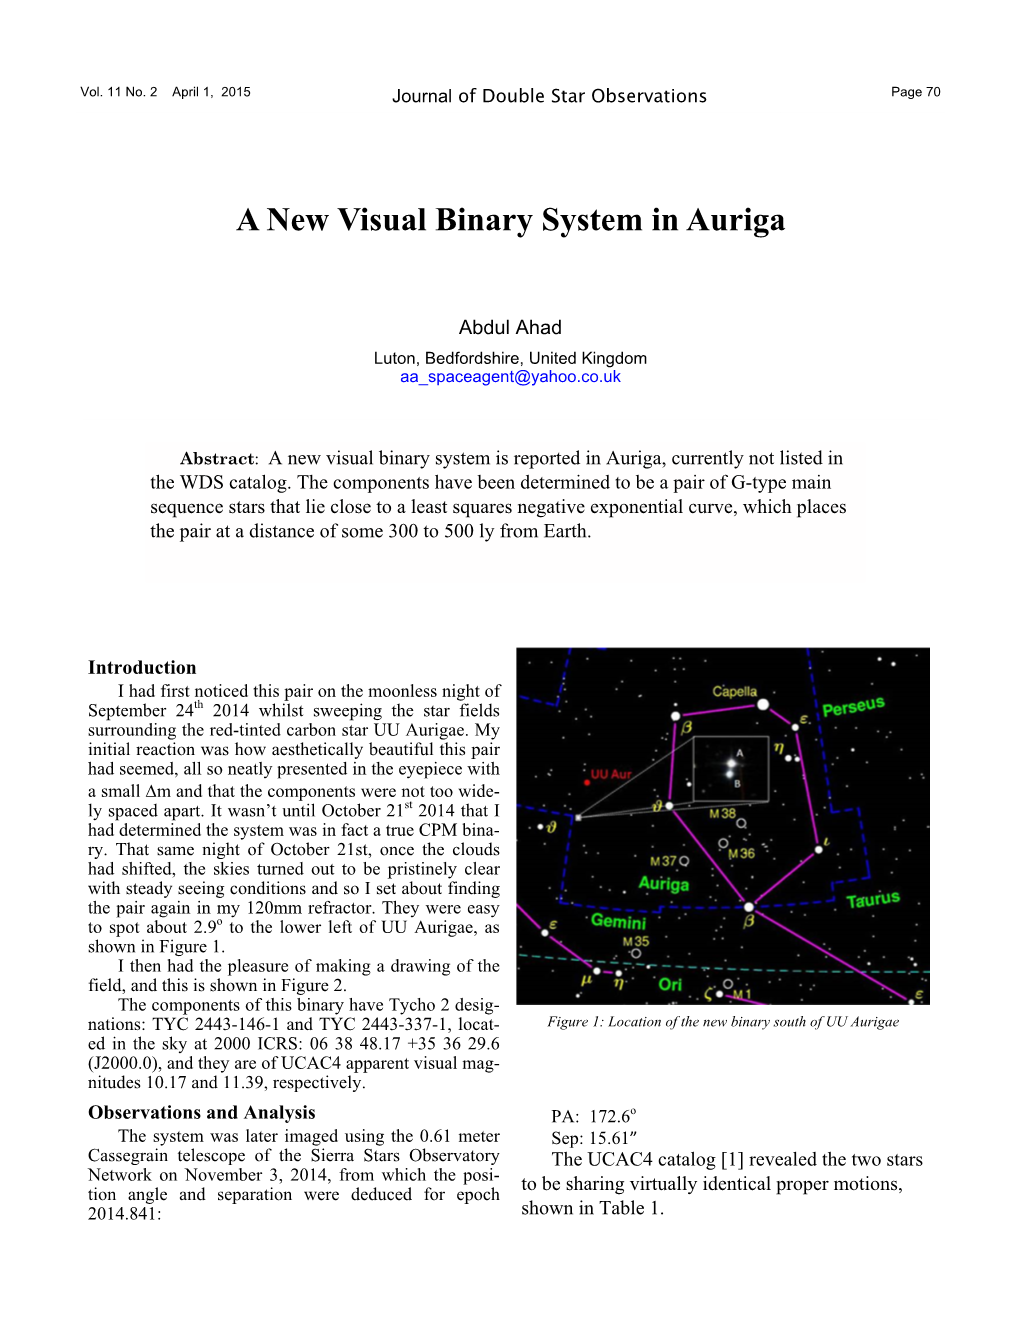 A New Visual Binary System in Auriga